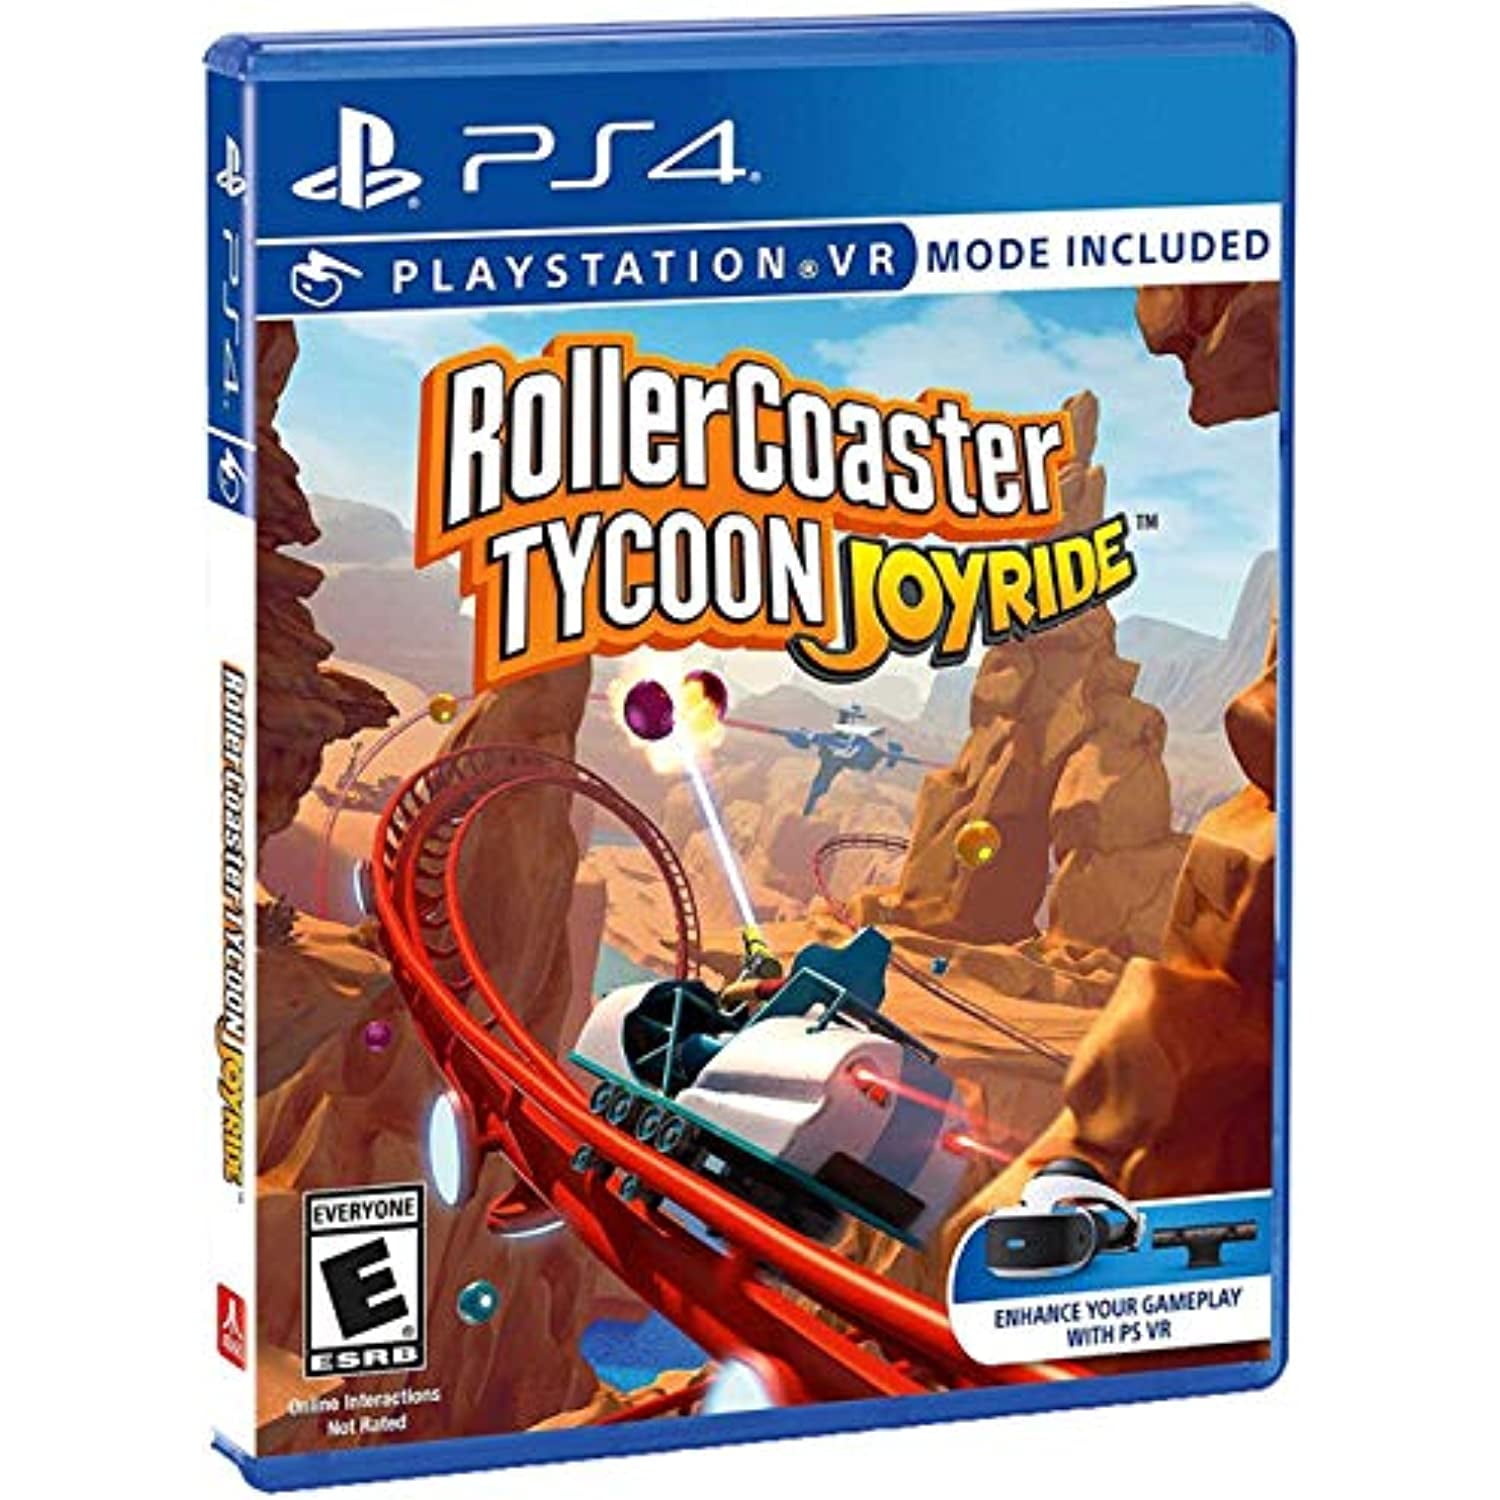 Rollercoaster Tycoon Joyride -